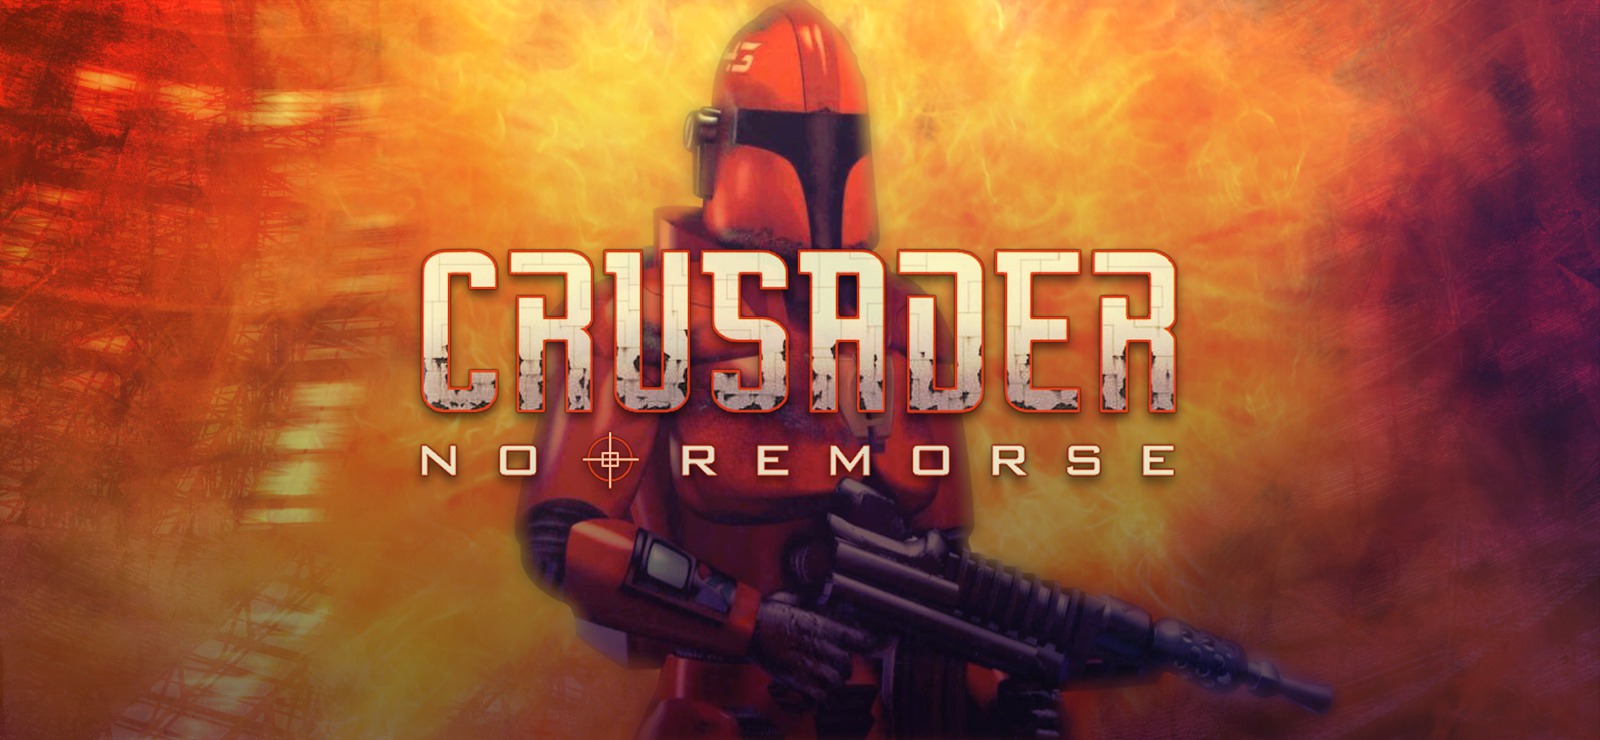 crusader no remorse controls suck